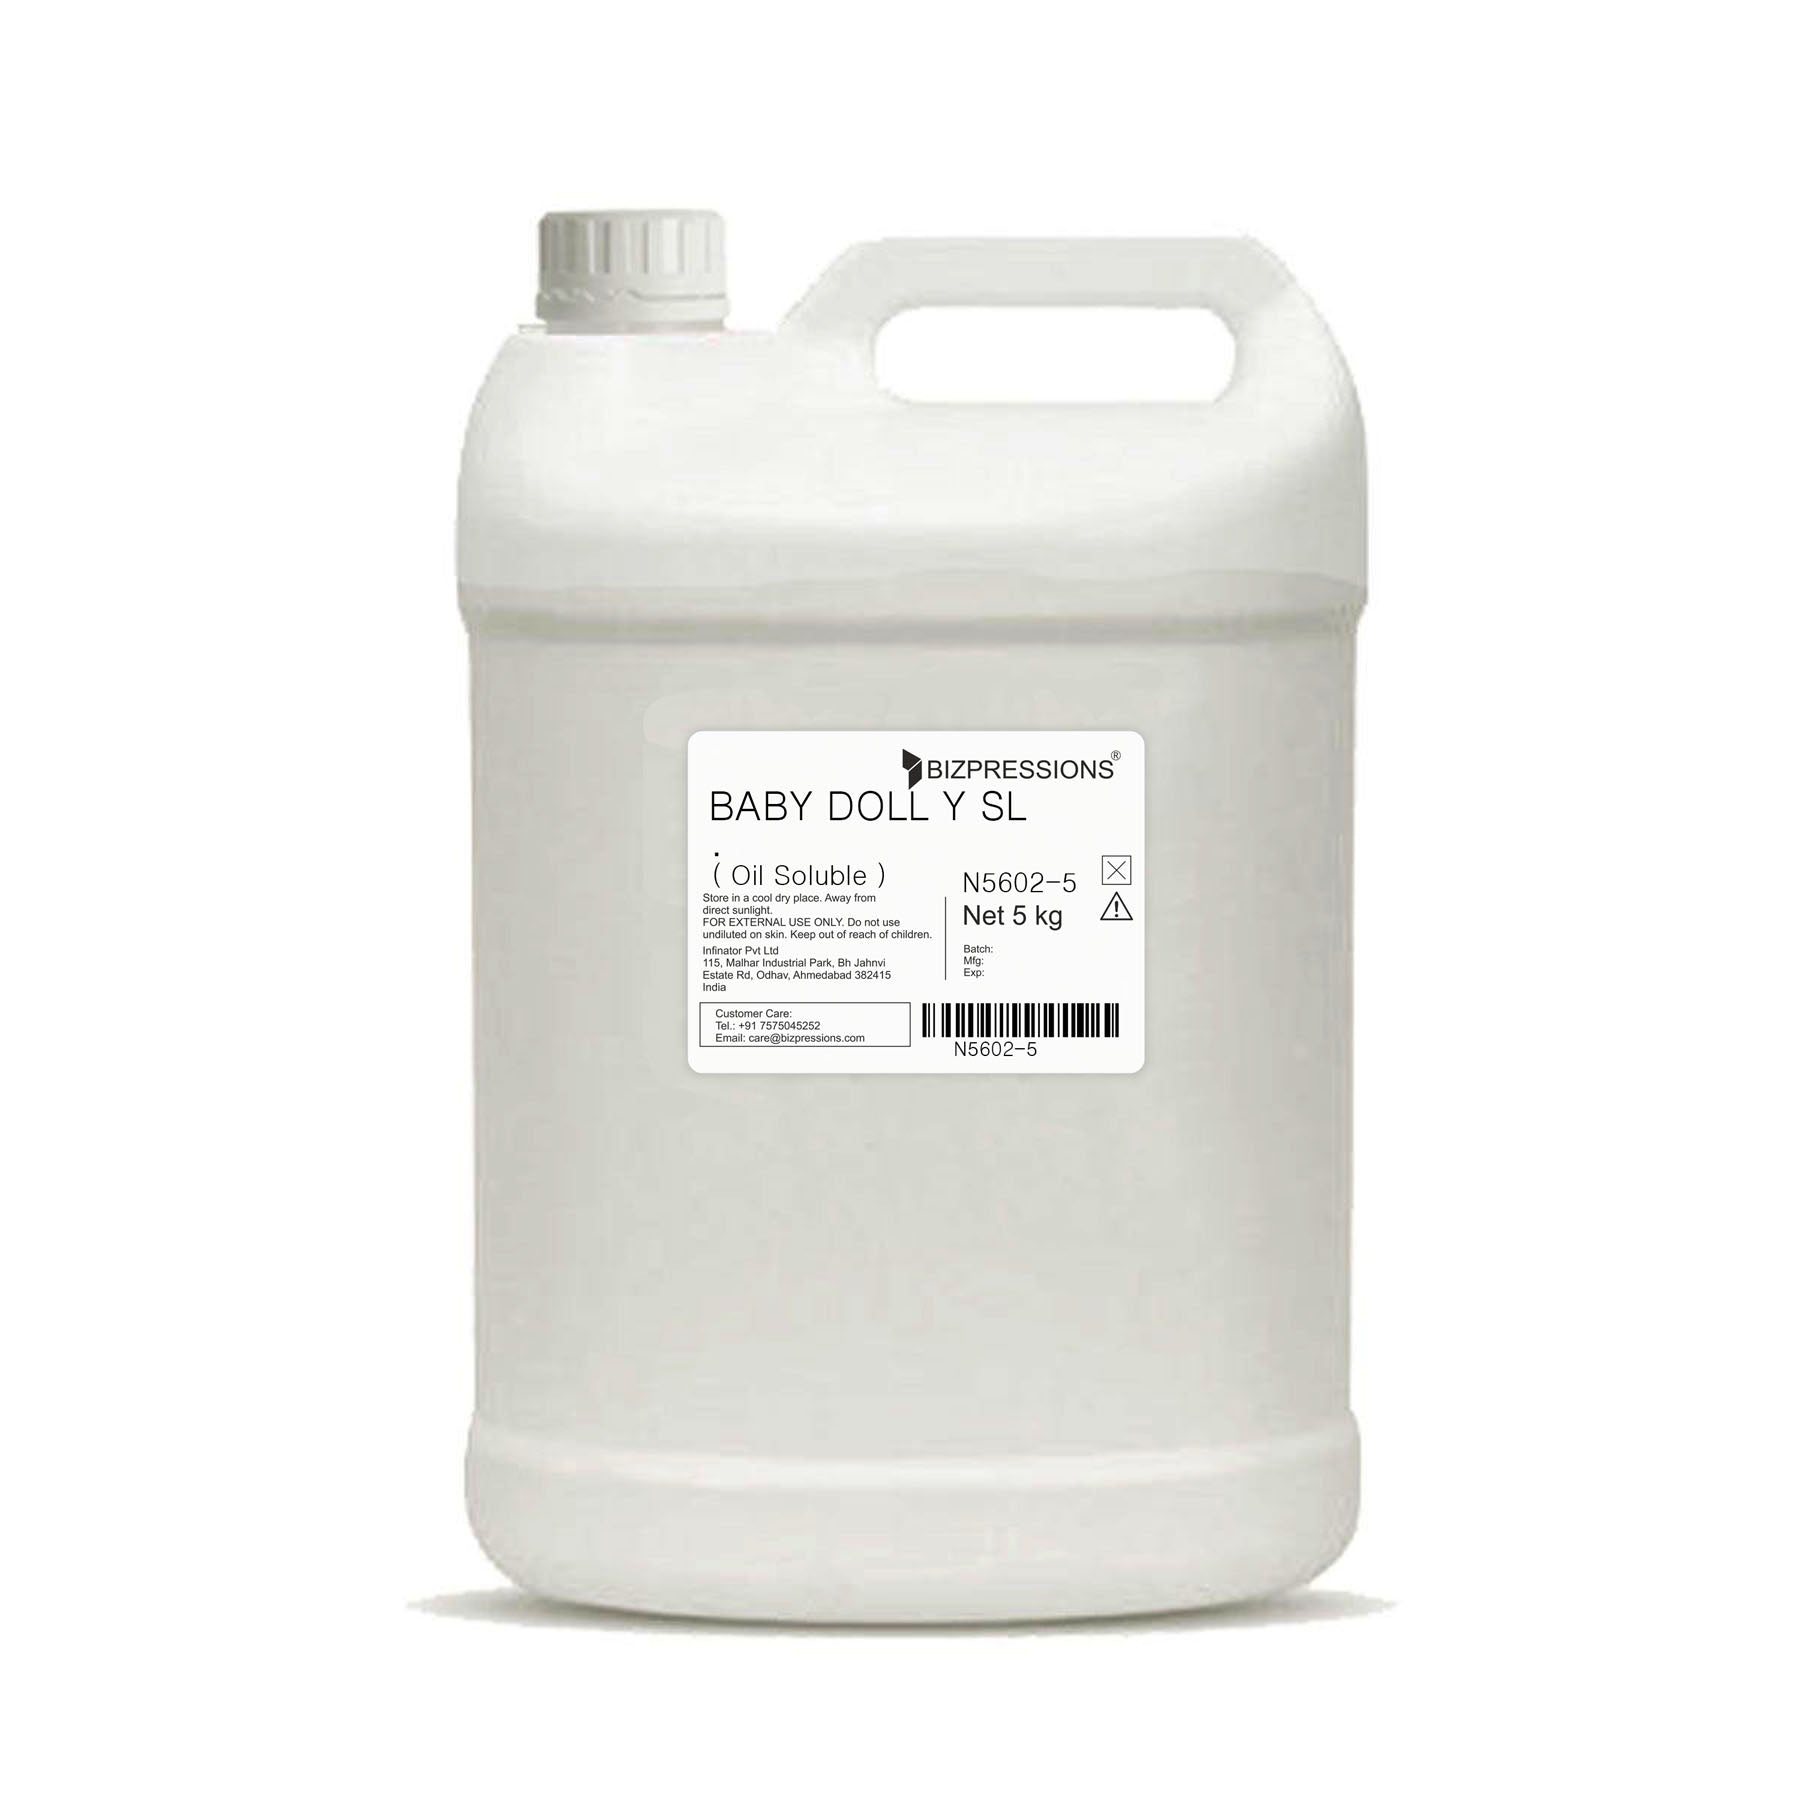 BABY DOLL YSL - Fragrance ( Oil Soluble ) - 5 kg